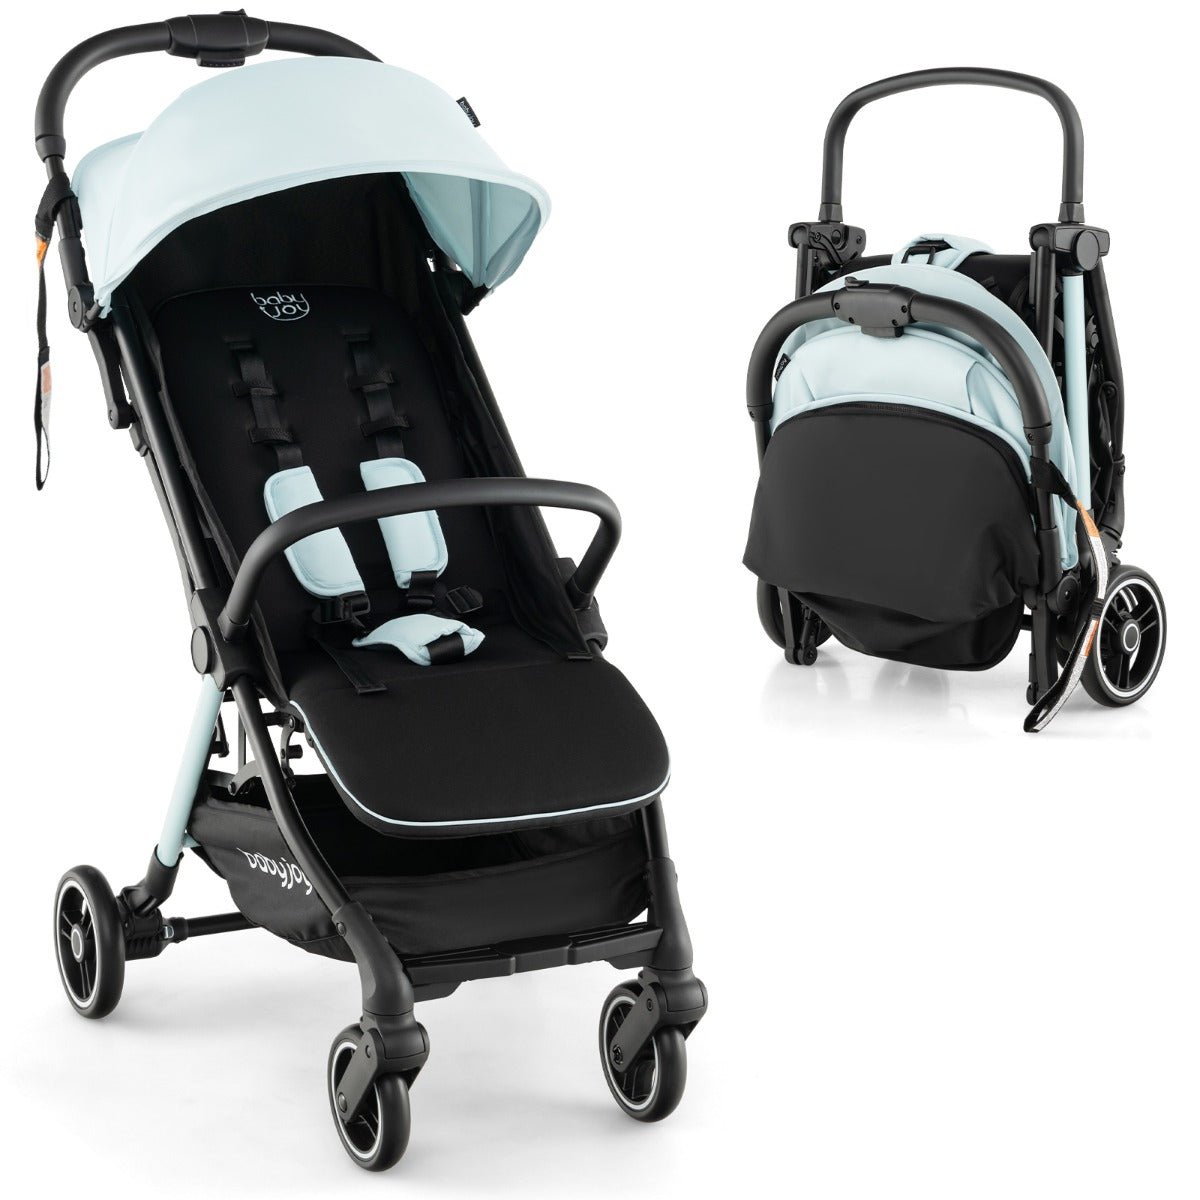 Blue Baby Stroller - Enjoy Outdoor Adventures